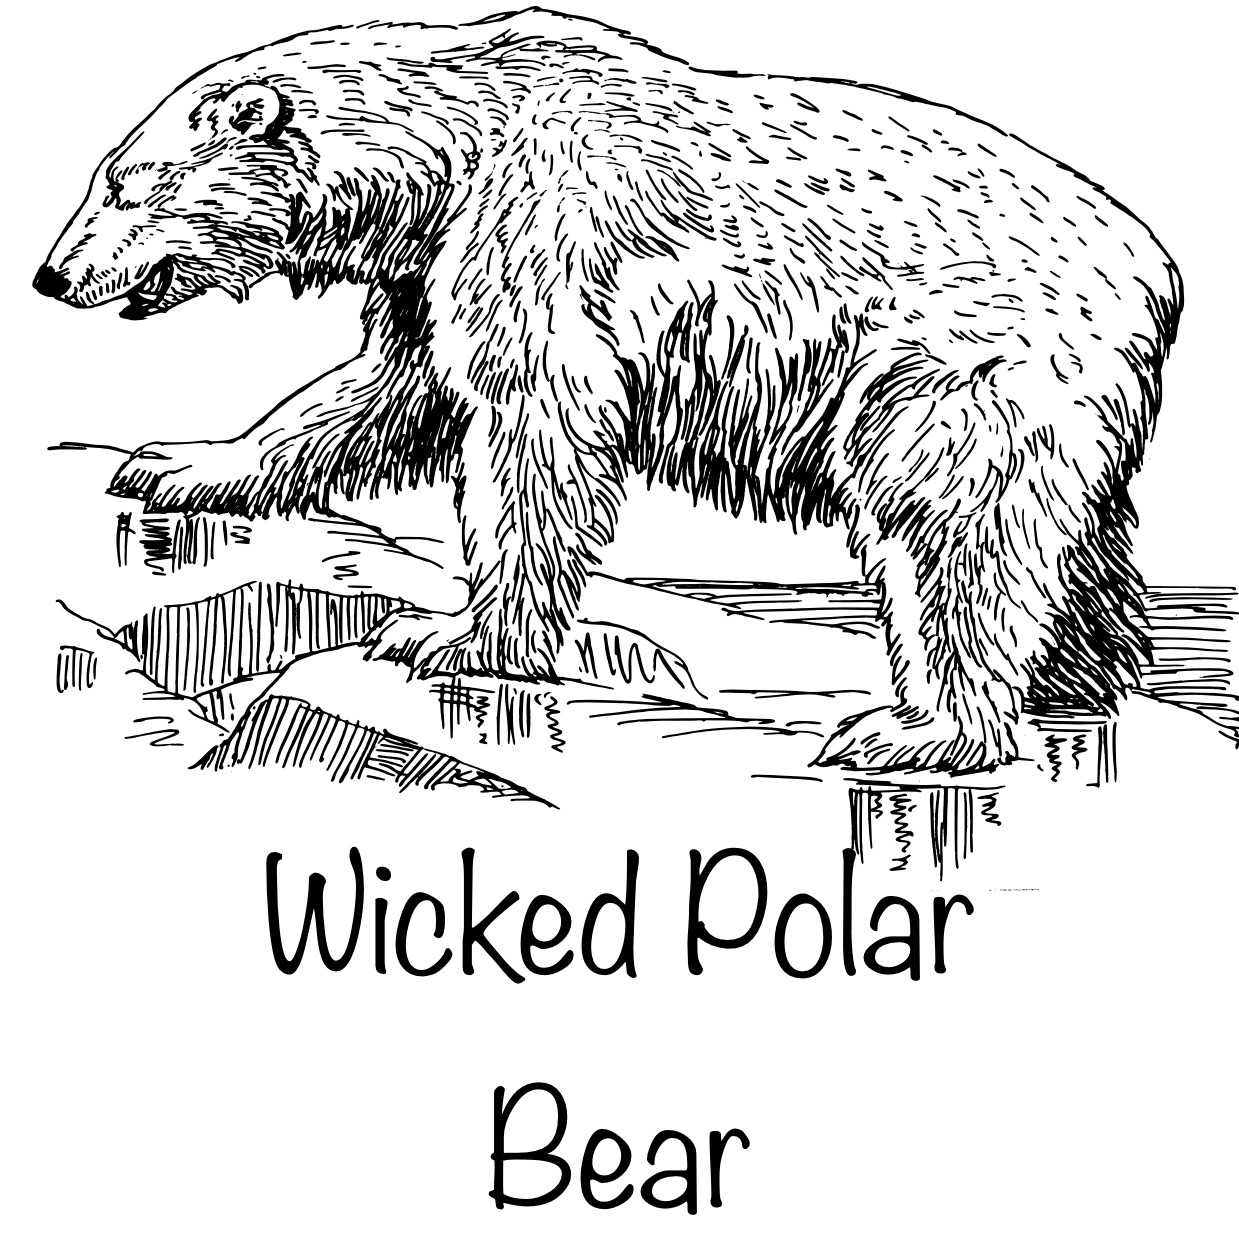 Audiobook The Wicked, Wicked Polar Bear